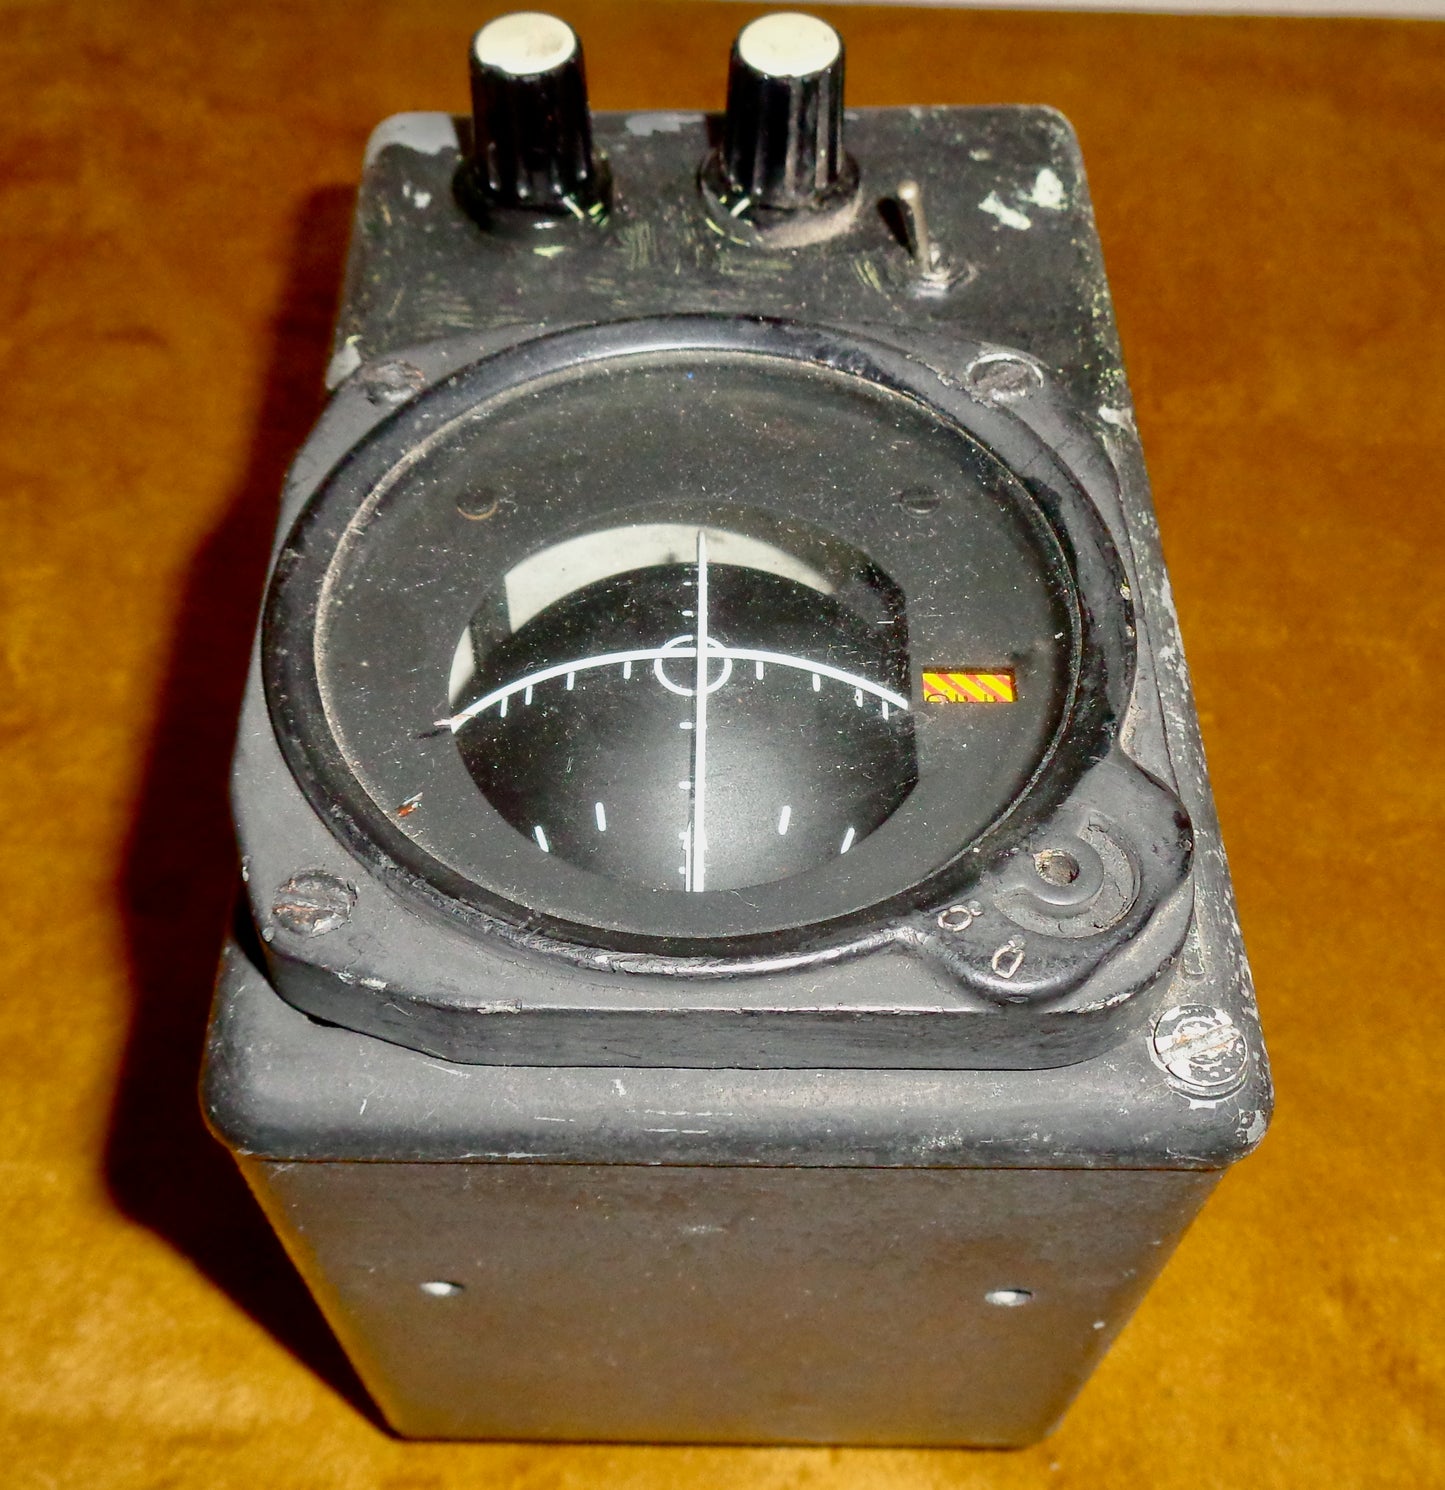 Vintage Attitude indicator Artificial Horizon Flight Instrument